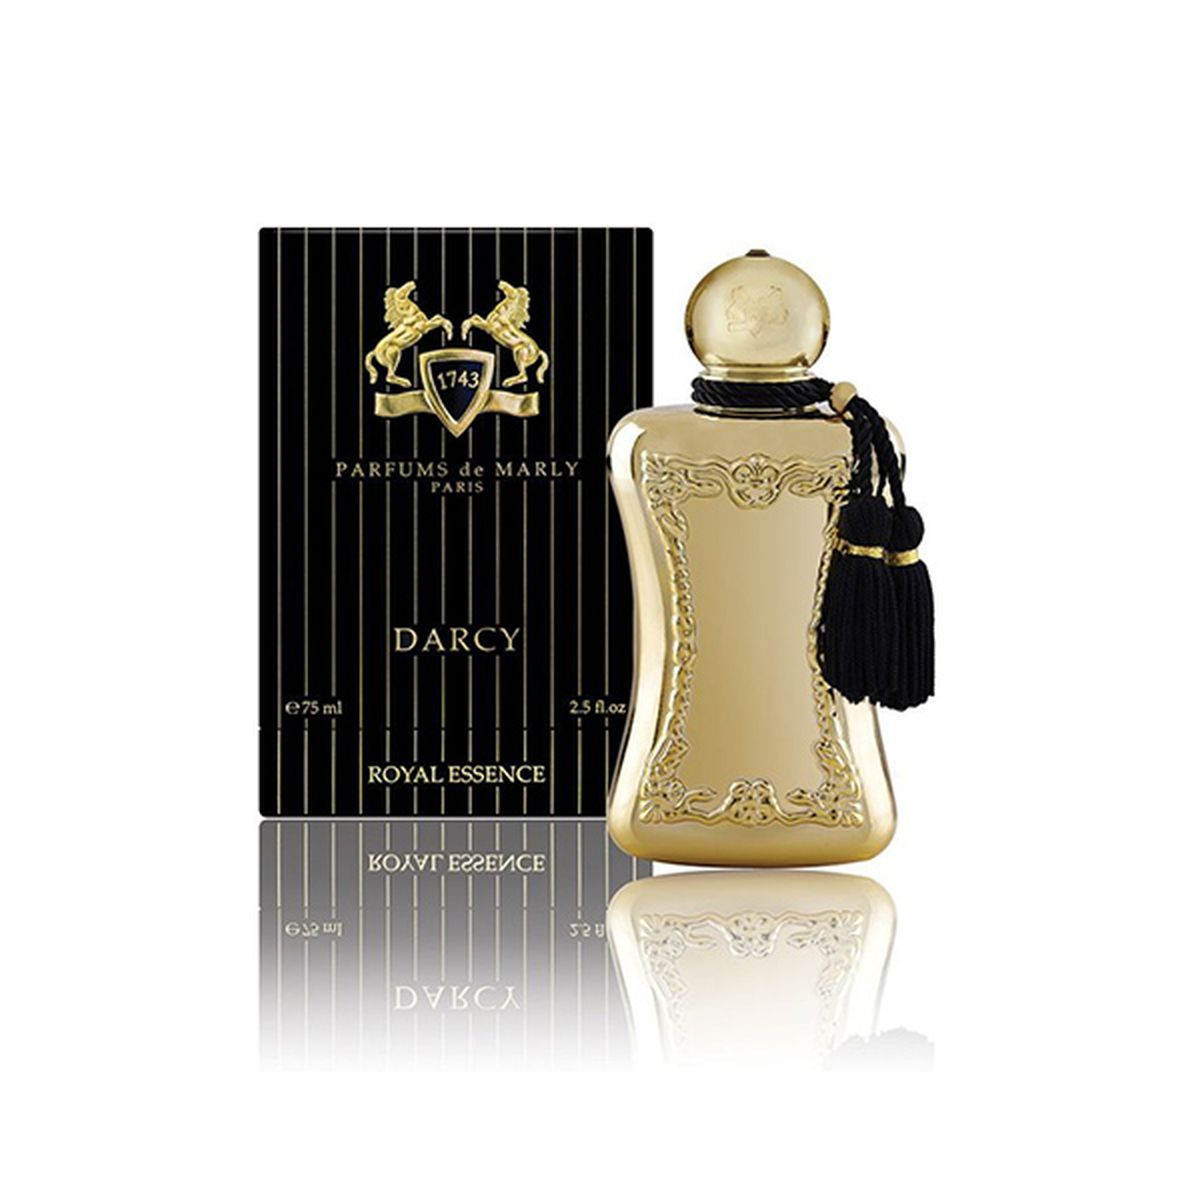 Parfums de Marly Darcy EAU DE PARFUM 75 ml